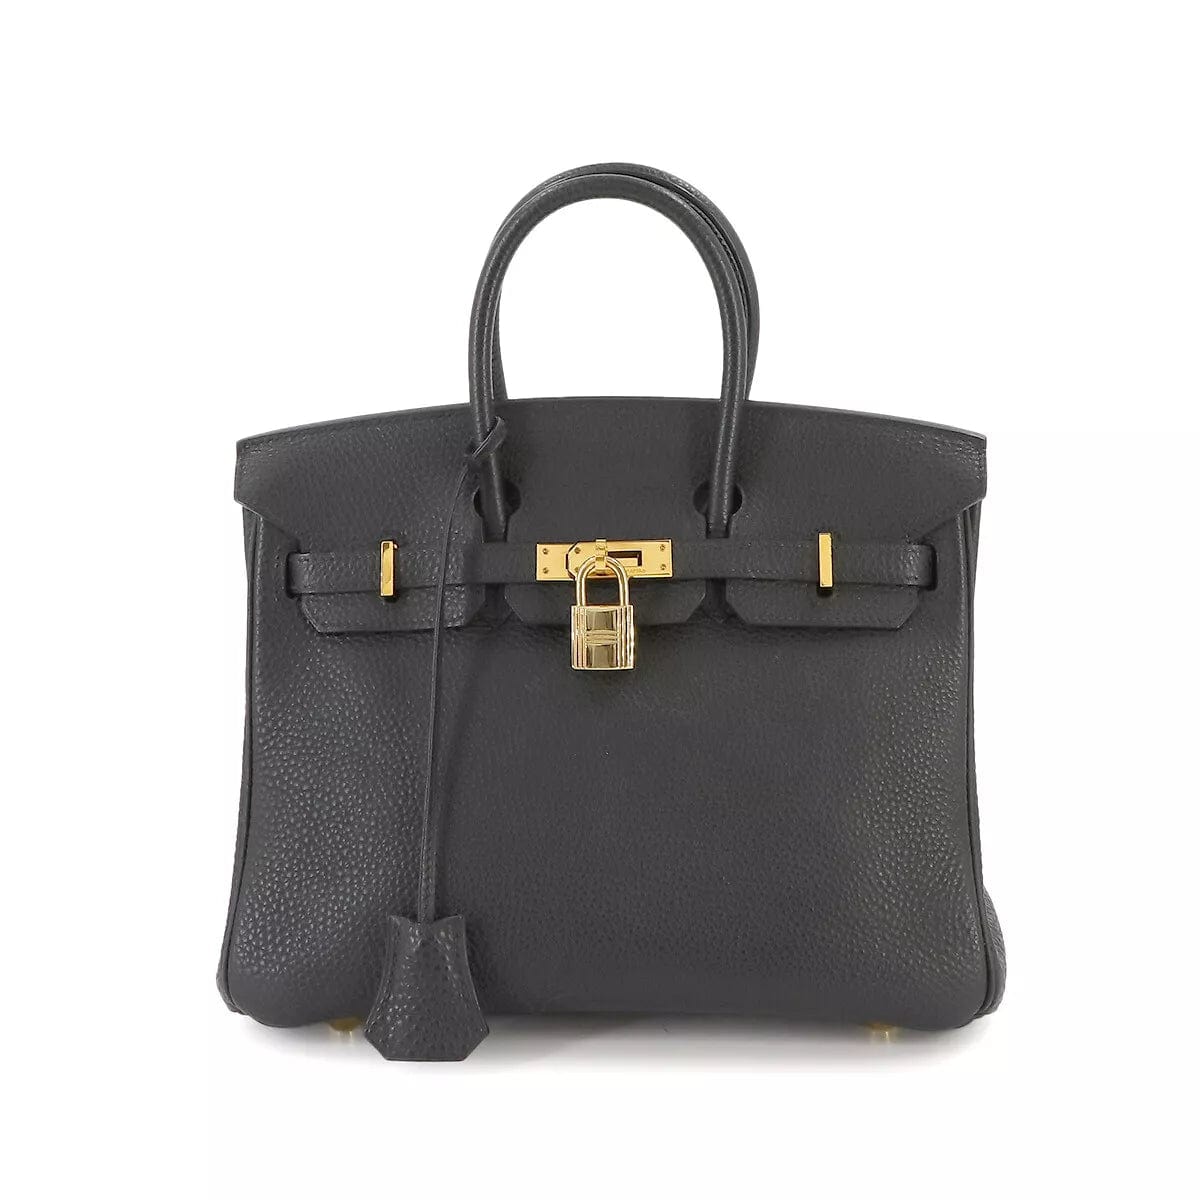 Hermès HERMES Birkin25 Hand Bag Togo Leather Black Purse 90235913